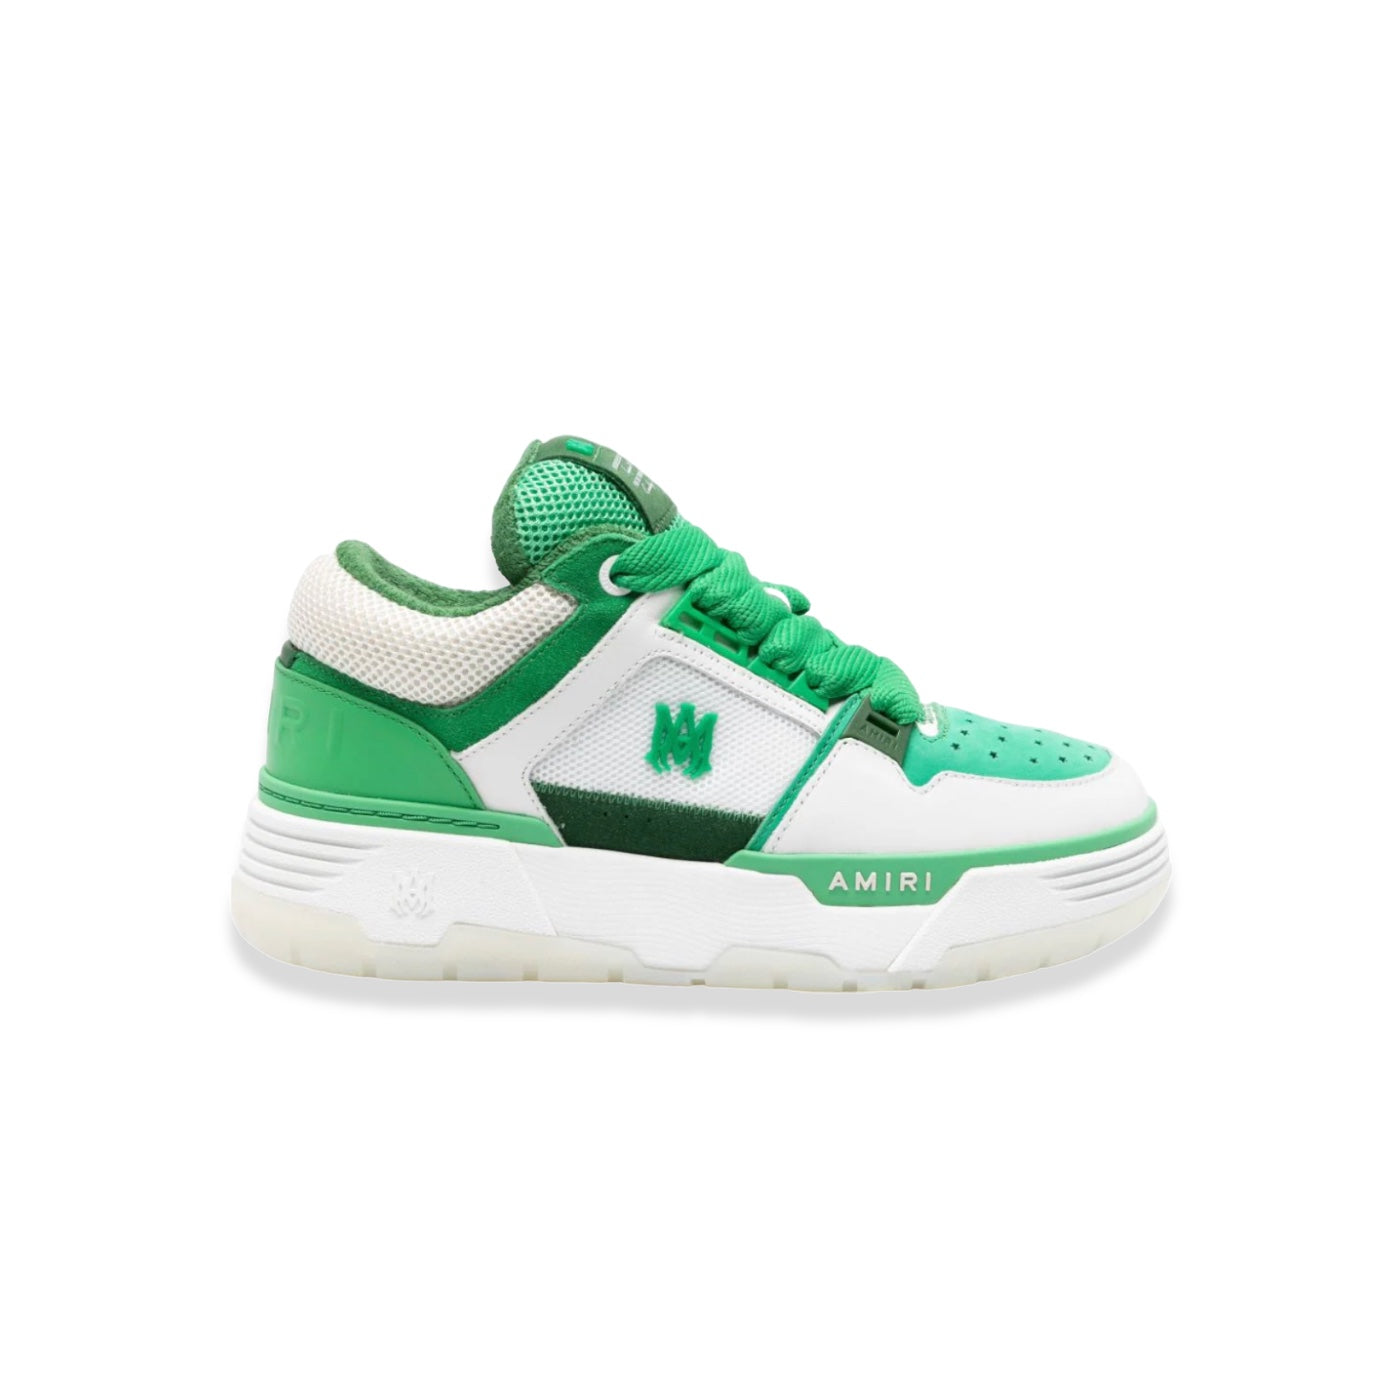 Amiri - MA1 Sneakers Green